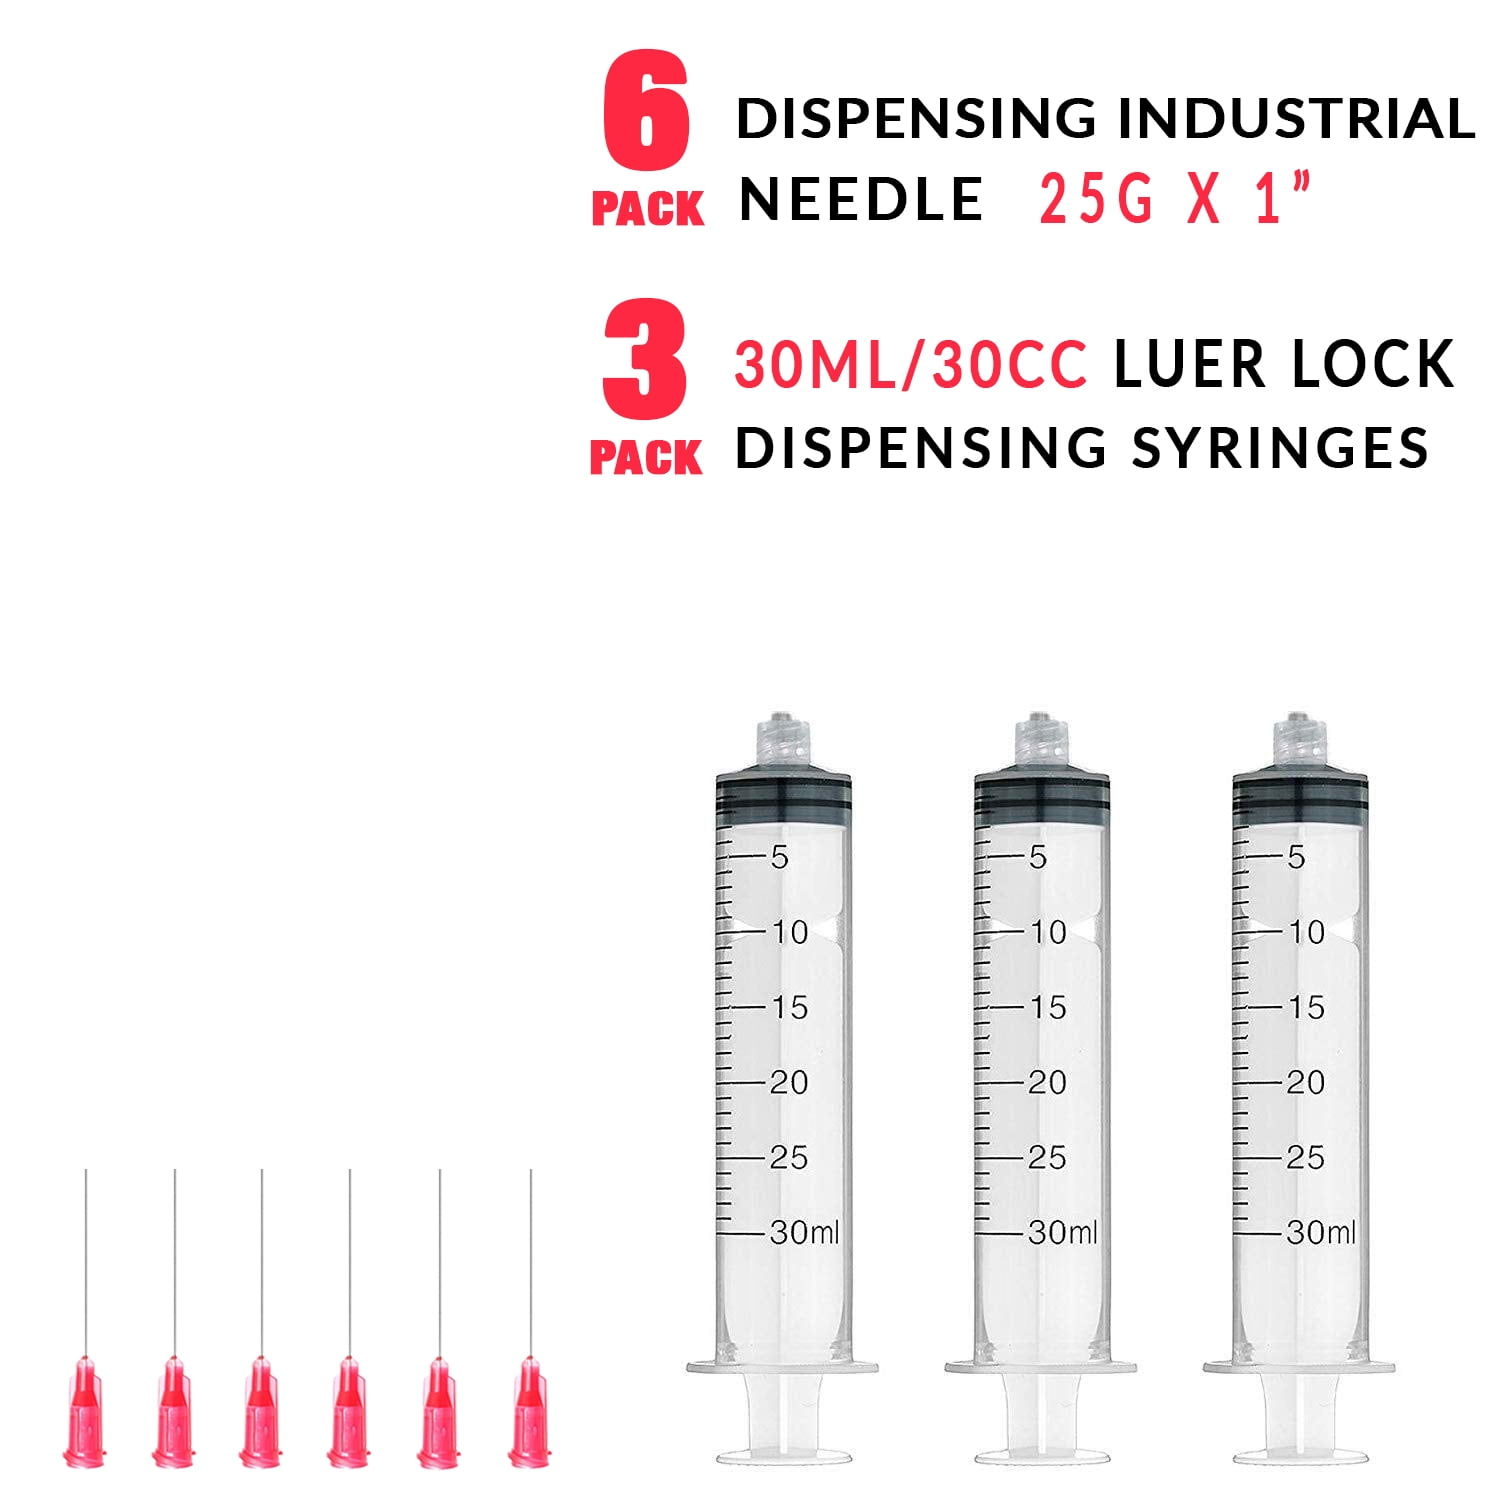 6 Pcs Dispensing Needle 25G x 1 with 3 Pcs 30ml Syringe - Blunt